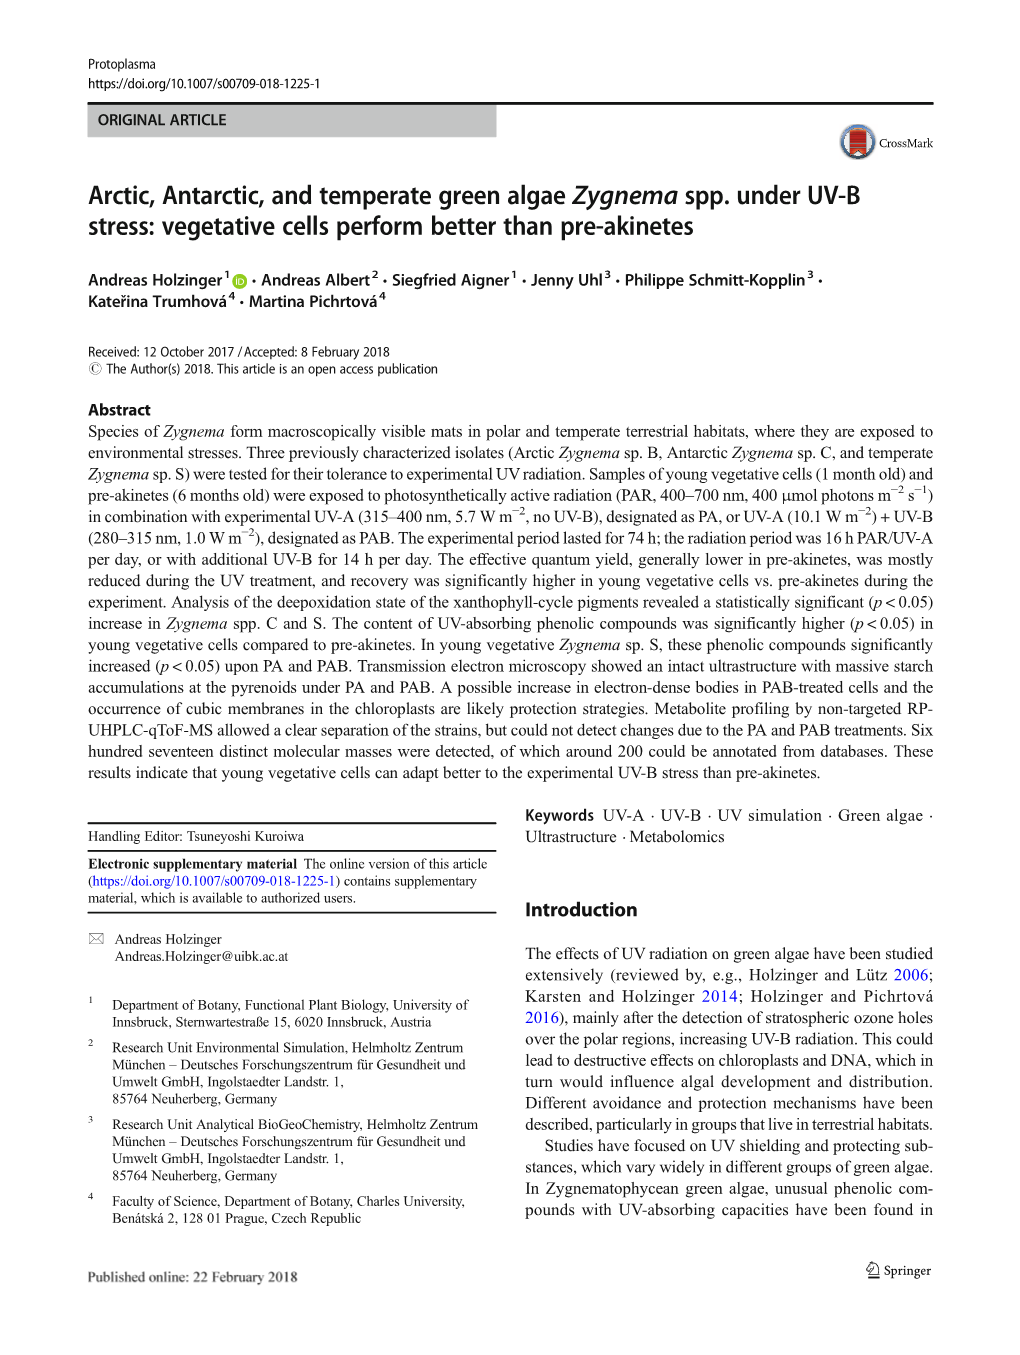 Arctic, Antarctic, and Temperate Green Algae Zygnema Spp. Under UV-B Stress: Vegetative Cells Perform Better Than Pre-Akinetes